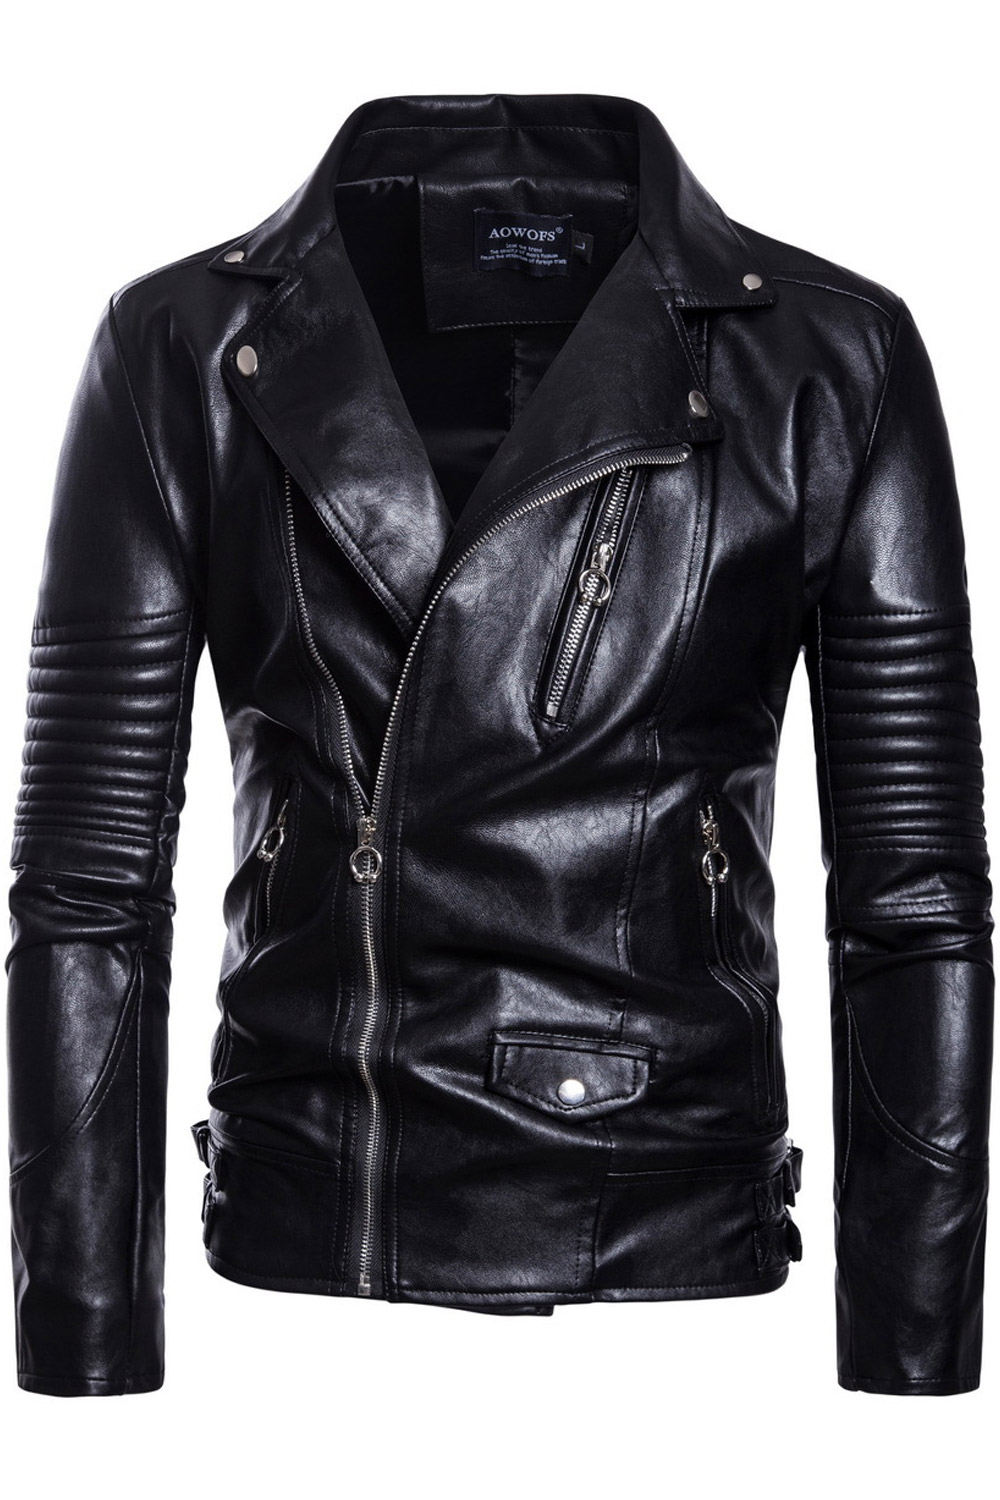 zara leather jacket men